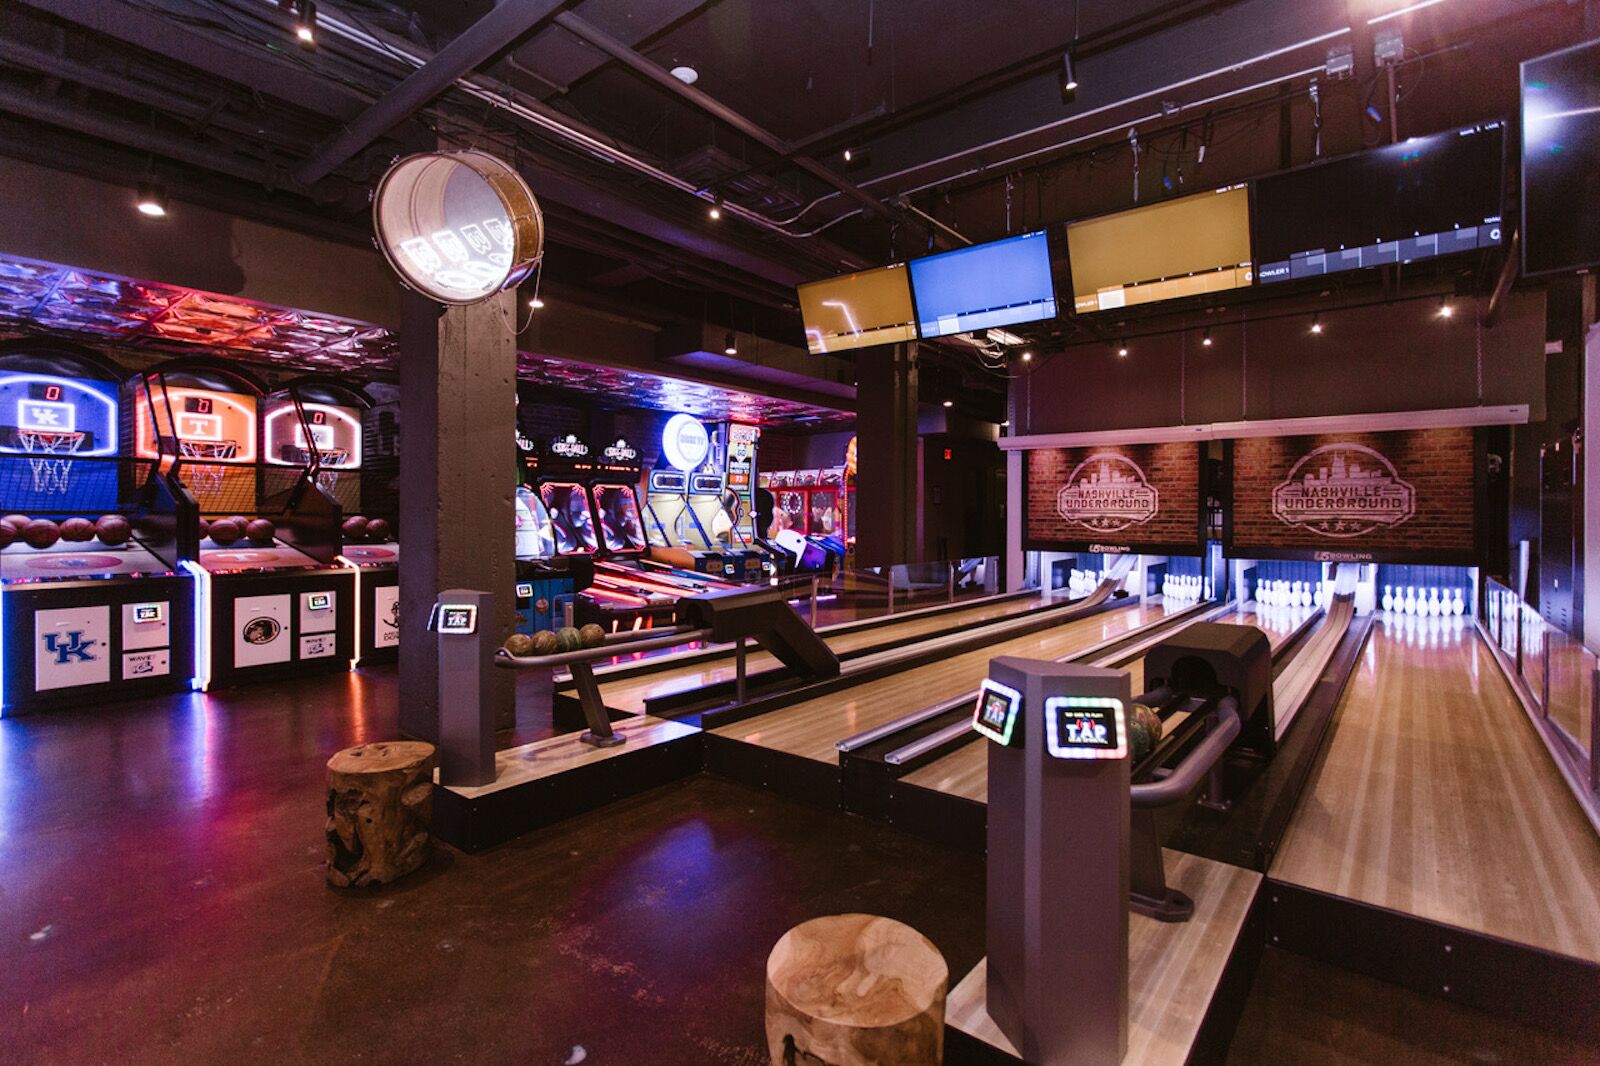 Bowling lanes and arcade games at Nashville Underground honky tonk bar